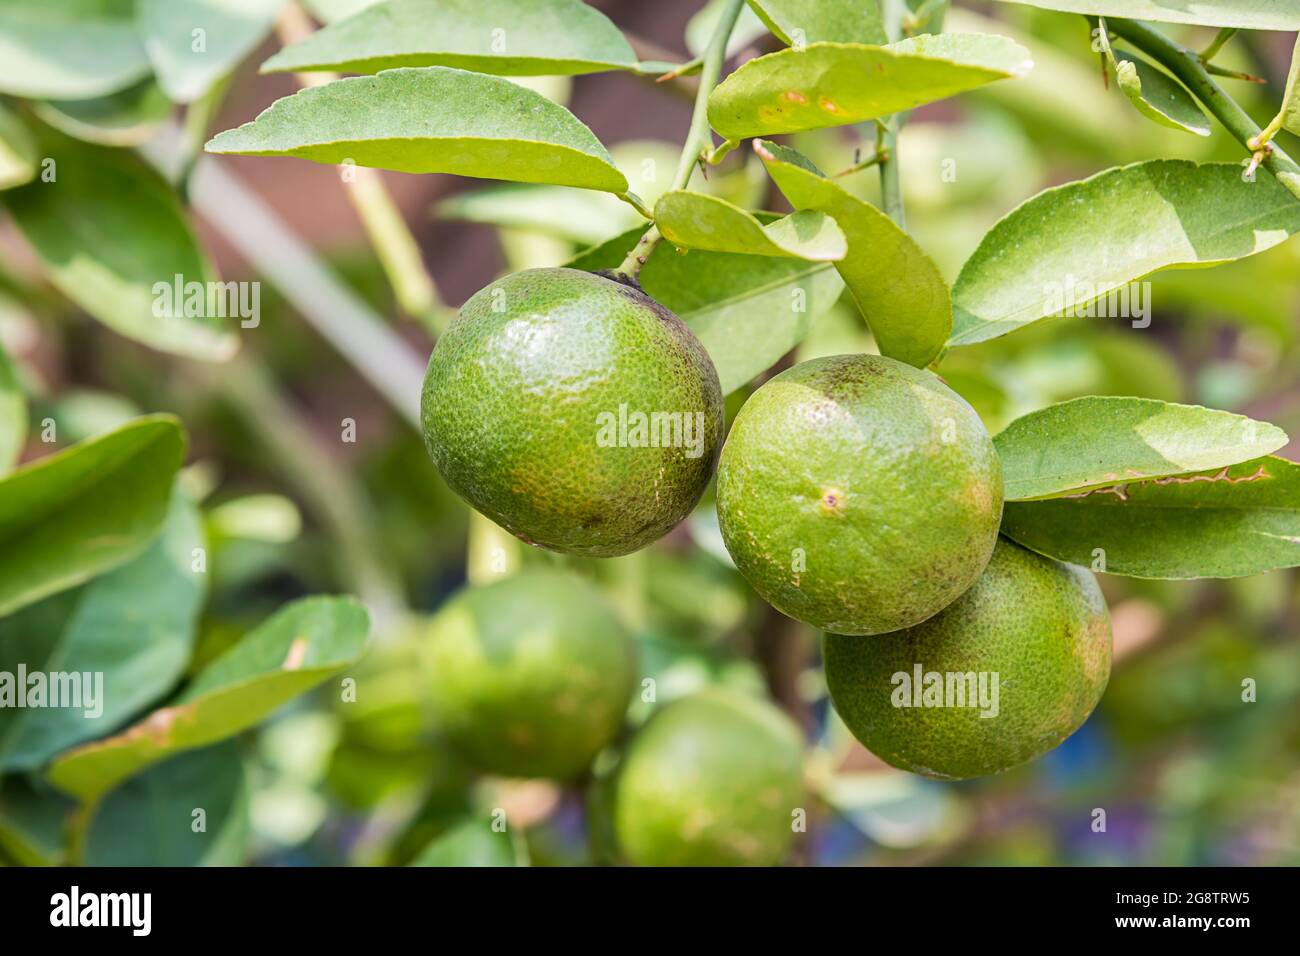 Green lemons on a branch in the garden. Stock Photo